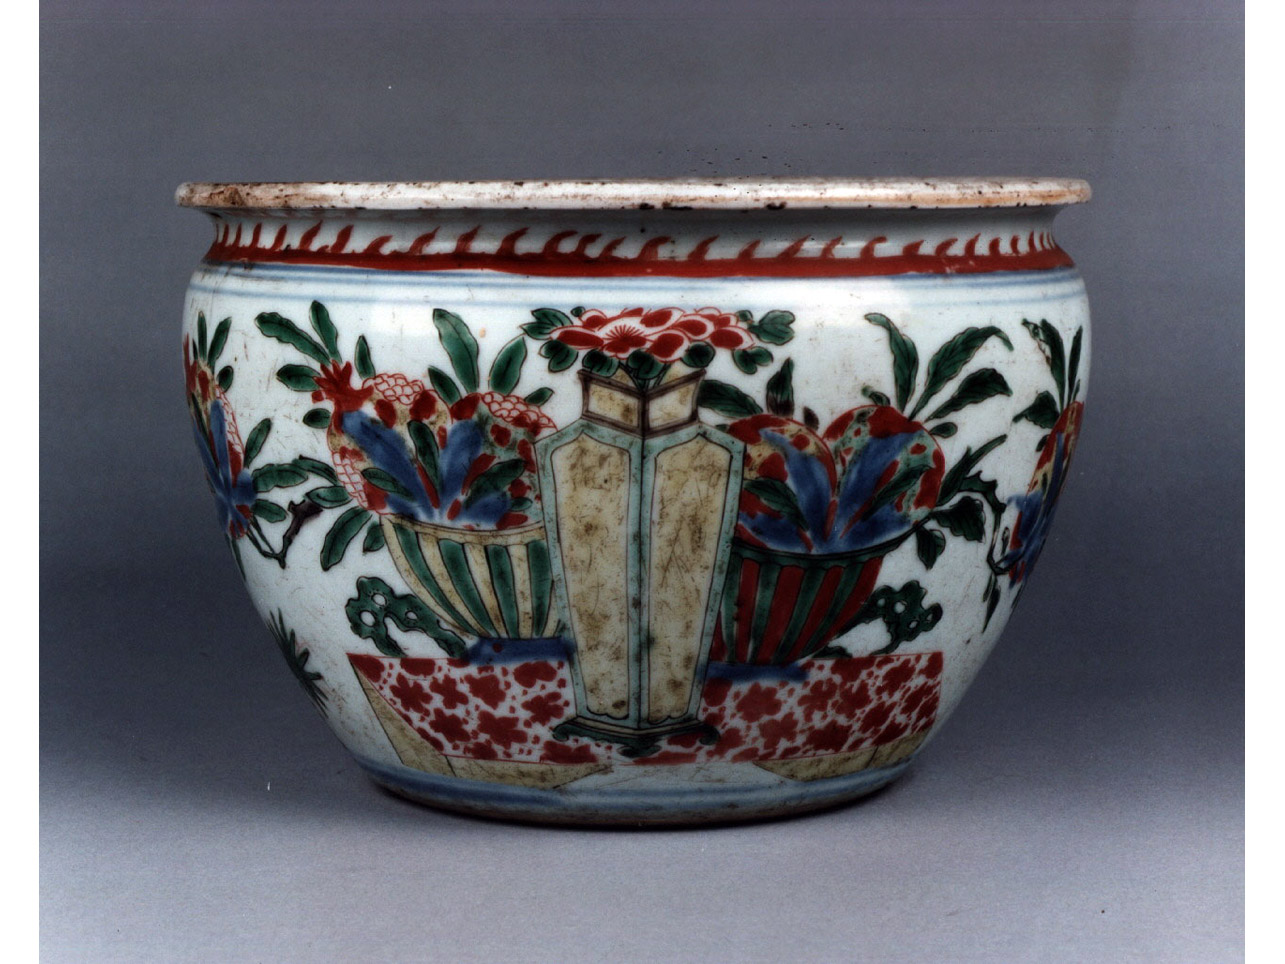 motivi decorativi floreali (vaso) - manifattura cinese (seconda metà sec. XVII)